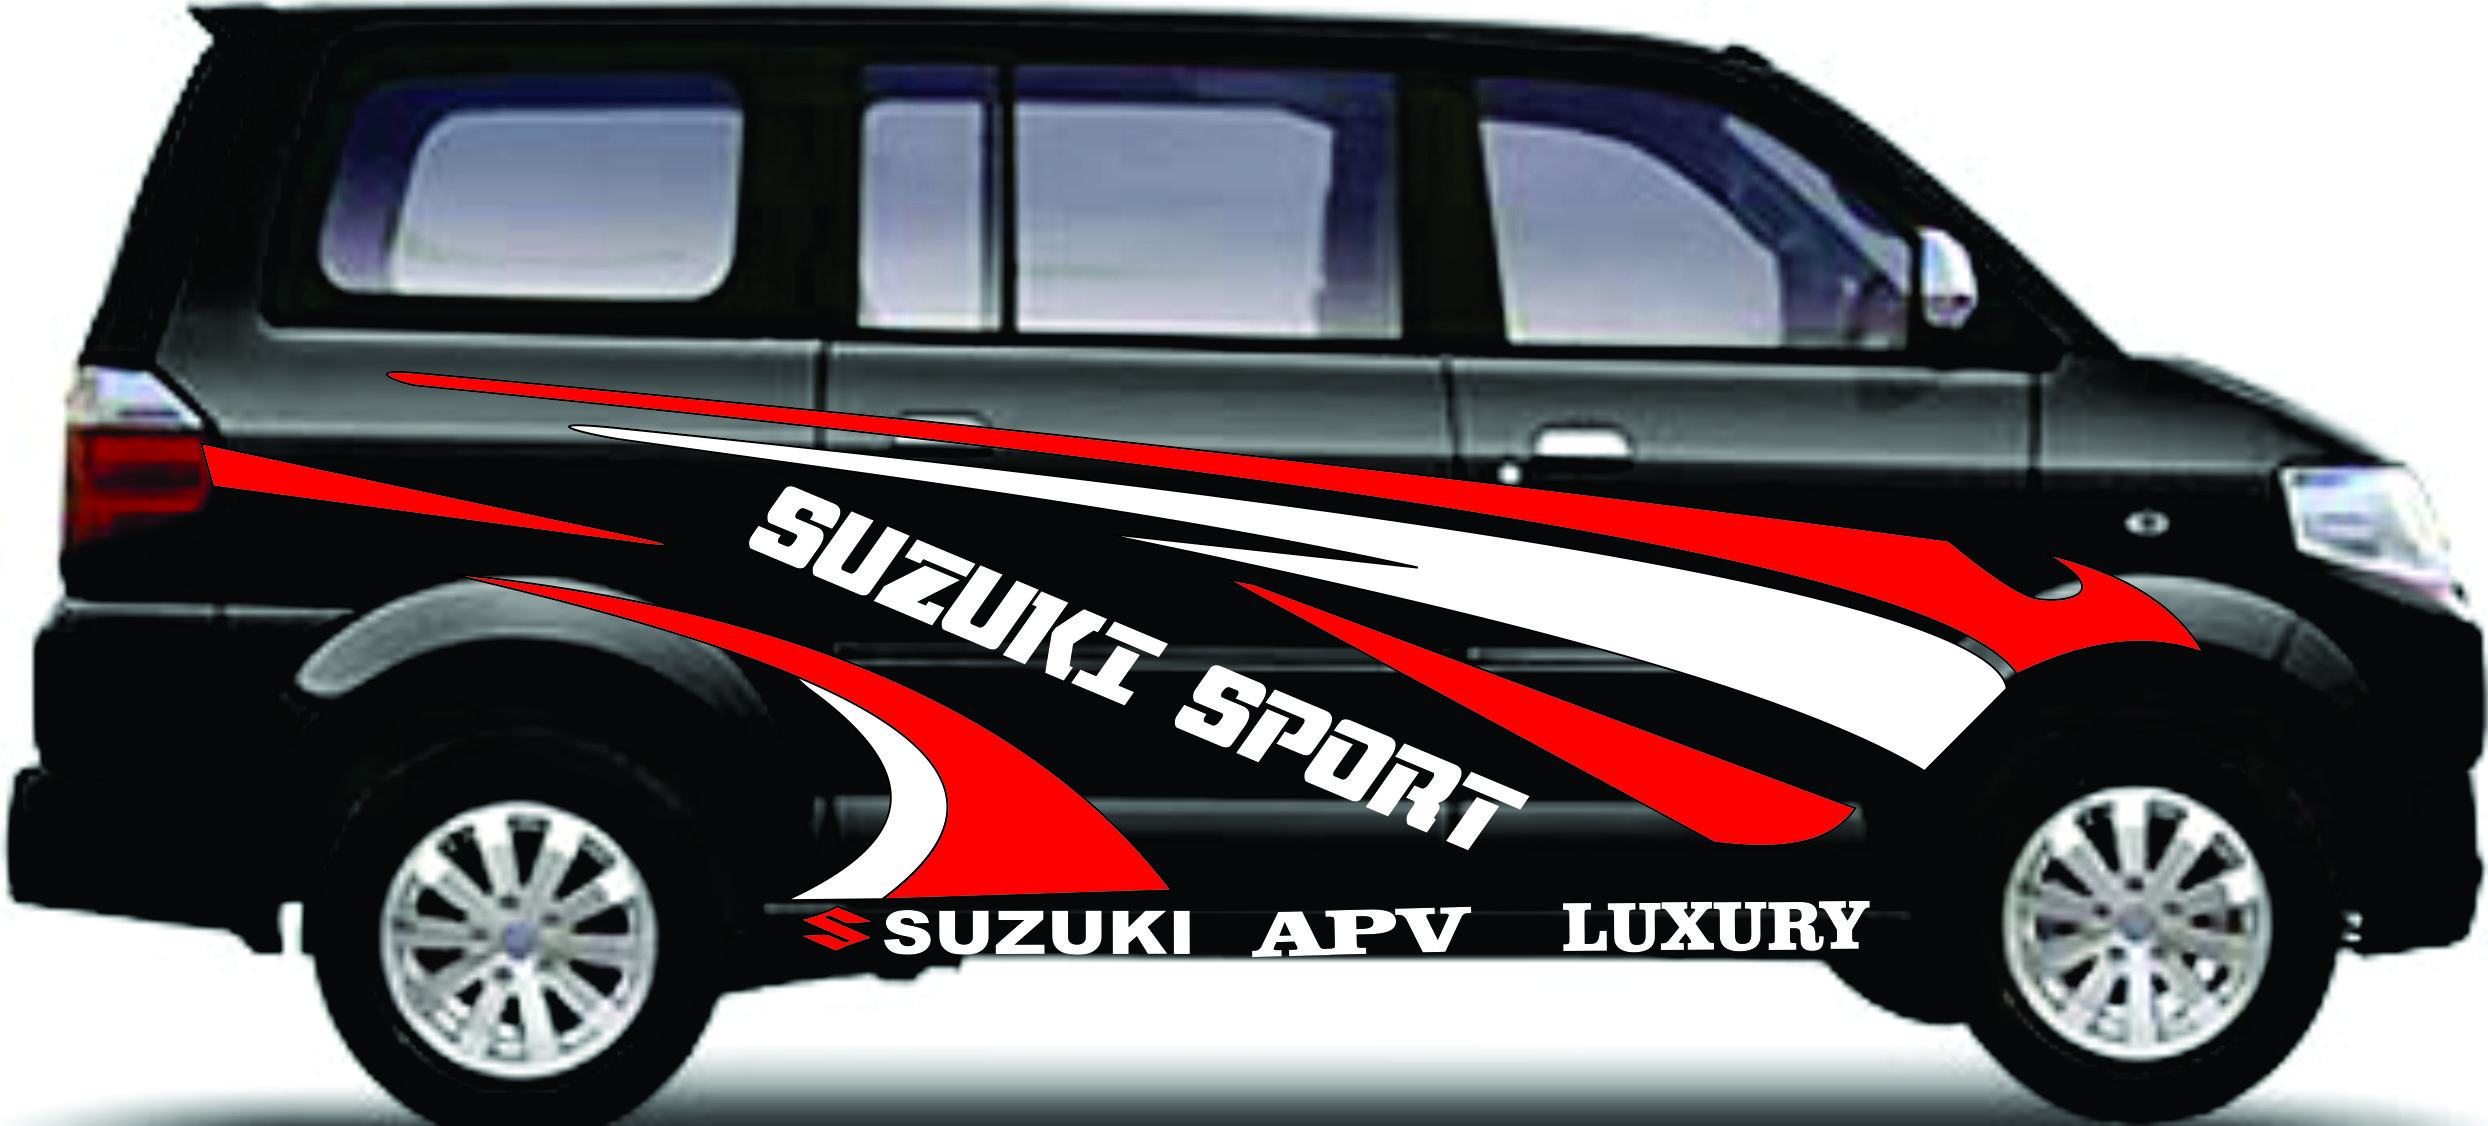 Stiker Mobil Suzuki Apv Luxury Striping Cutting Mobil Apv Promo Stiker Mobil Apv Lazada Indonesia